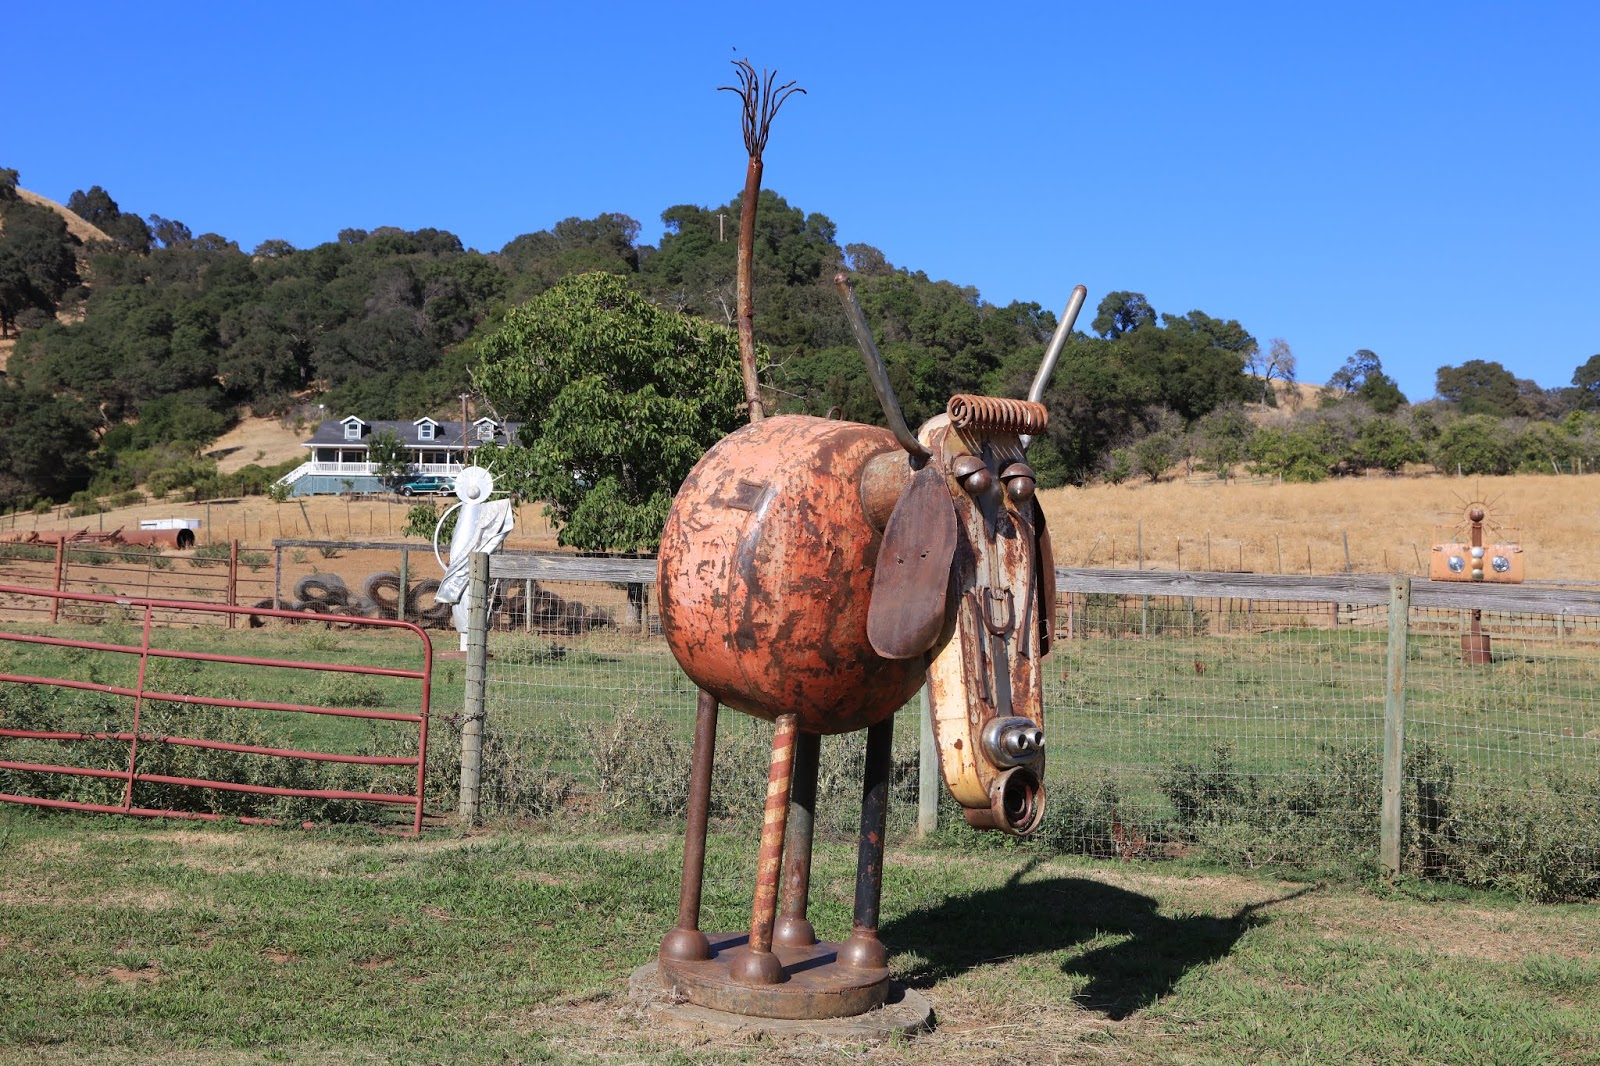 Cindy deRosier: My Creative Life: A Visit to Glashoff Sculpture Ranch